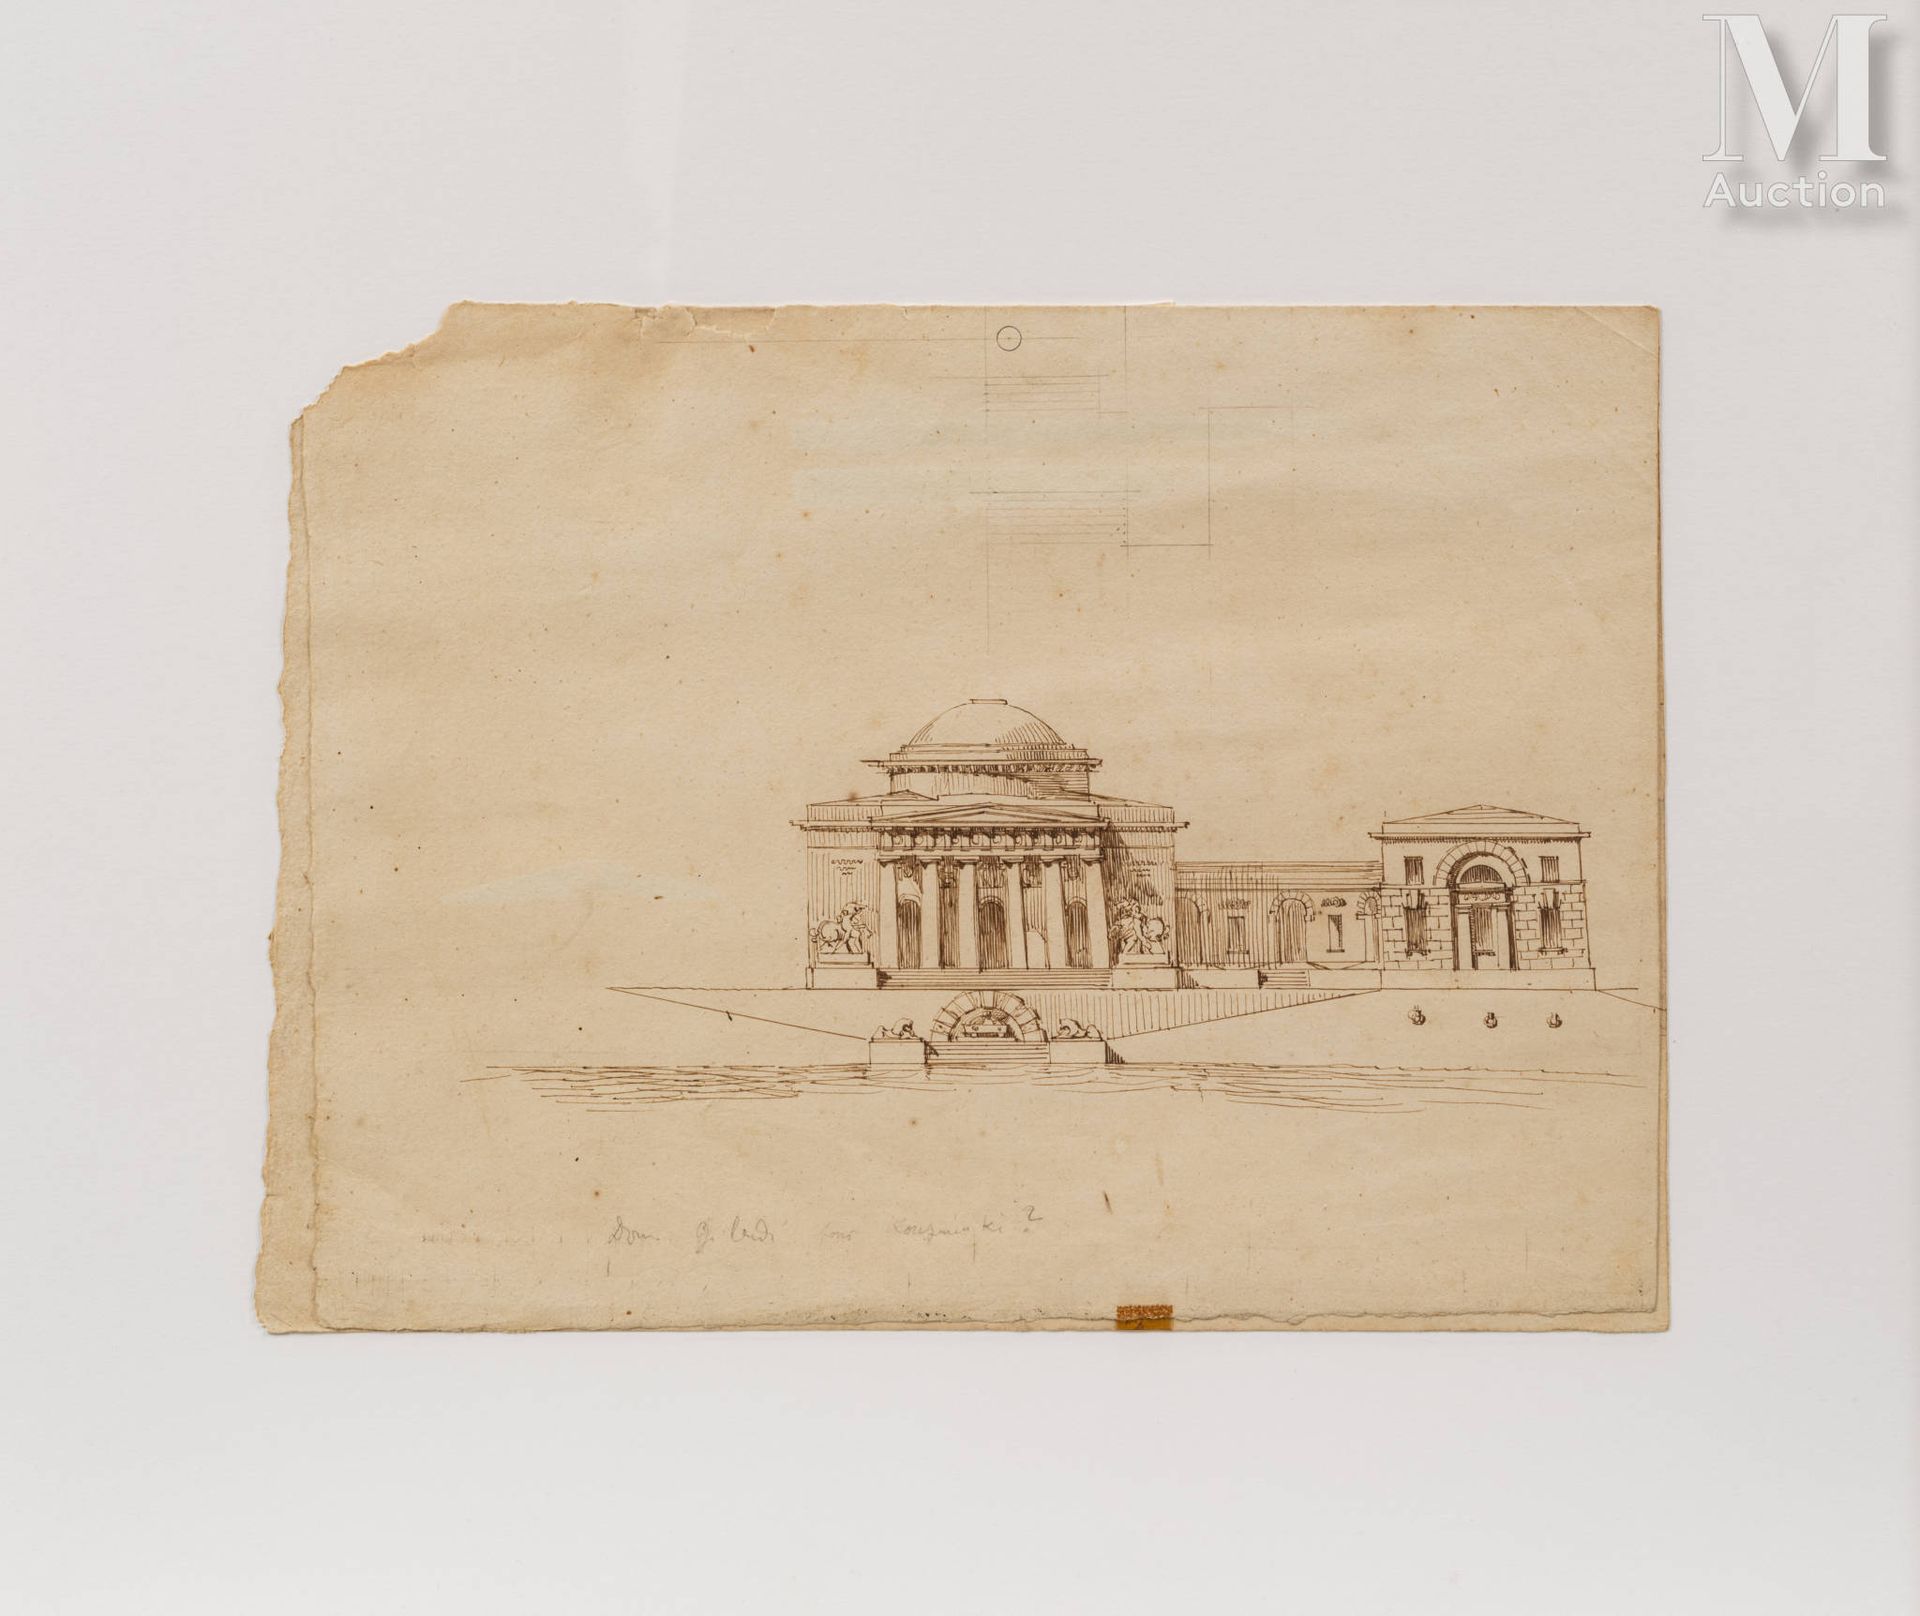 Lot de 3 projets d’architecture de Domenico Gilardi (1785-1845) : - 1 dibujo a t&hellip;